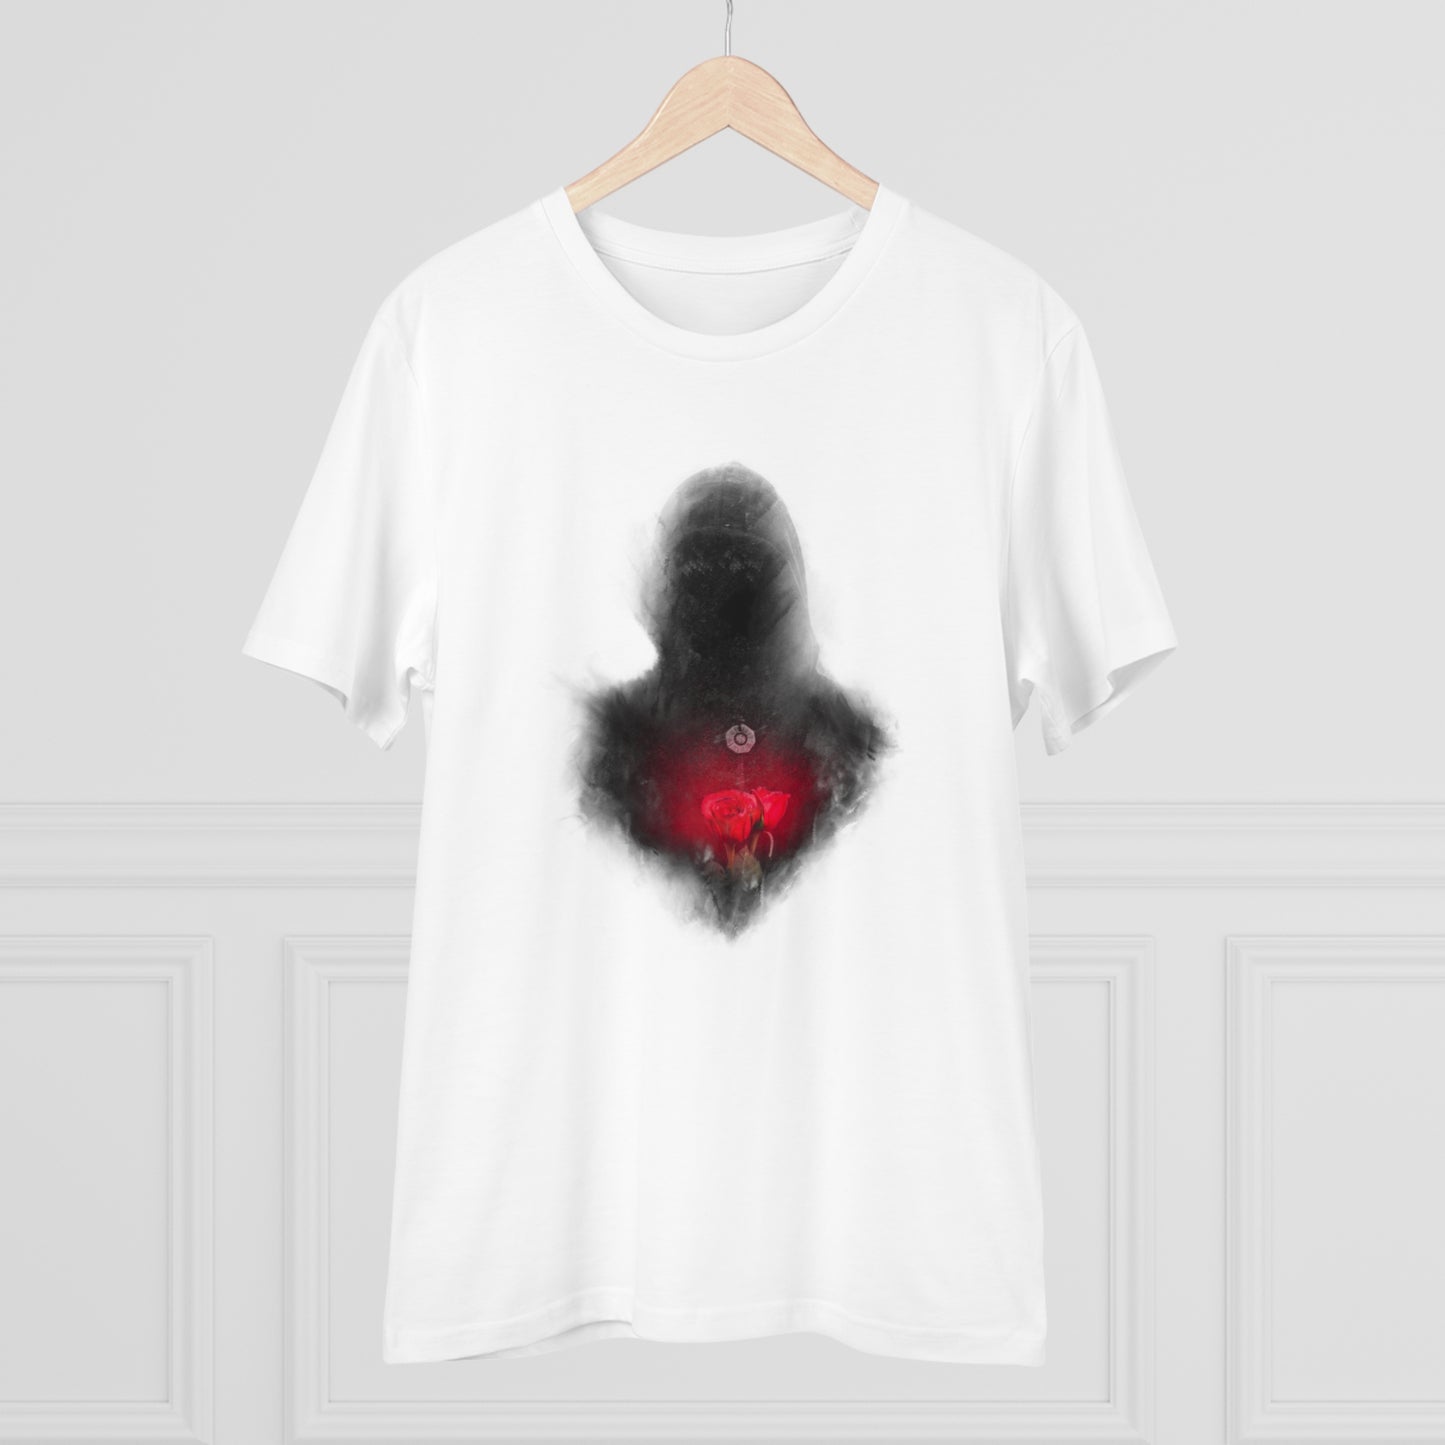 Organi  T-shirt - Unisex (shadow)